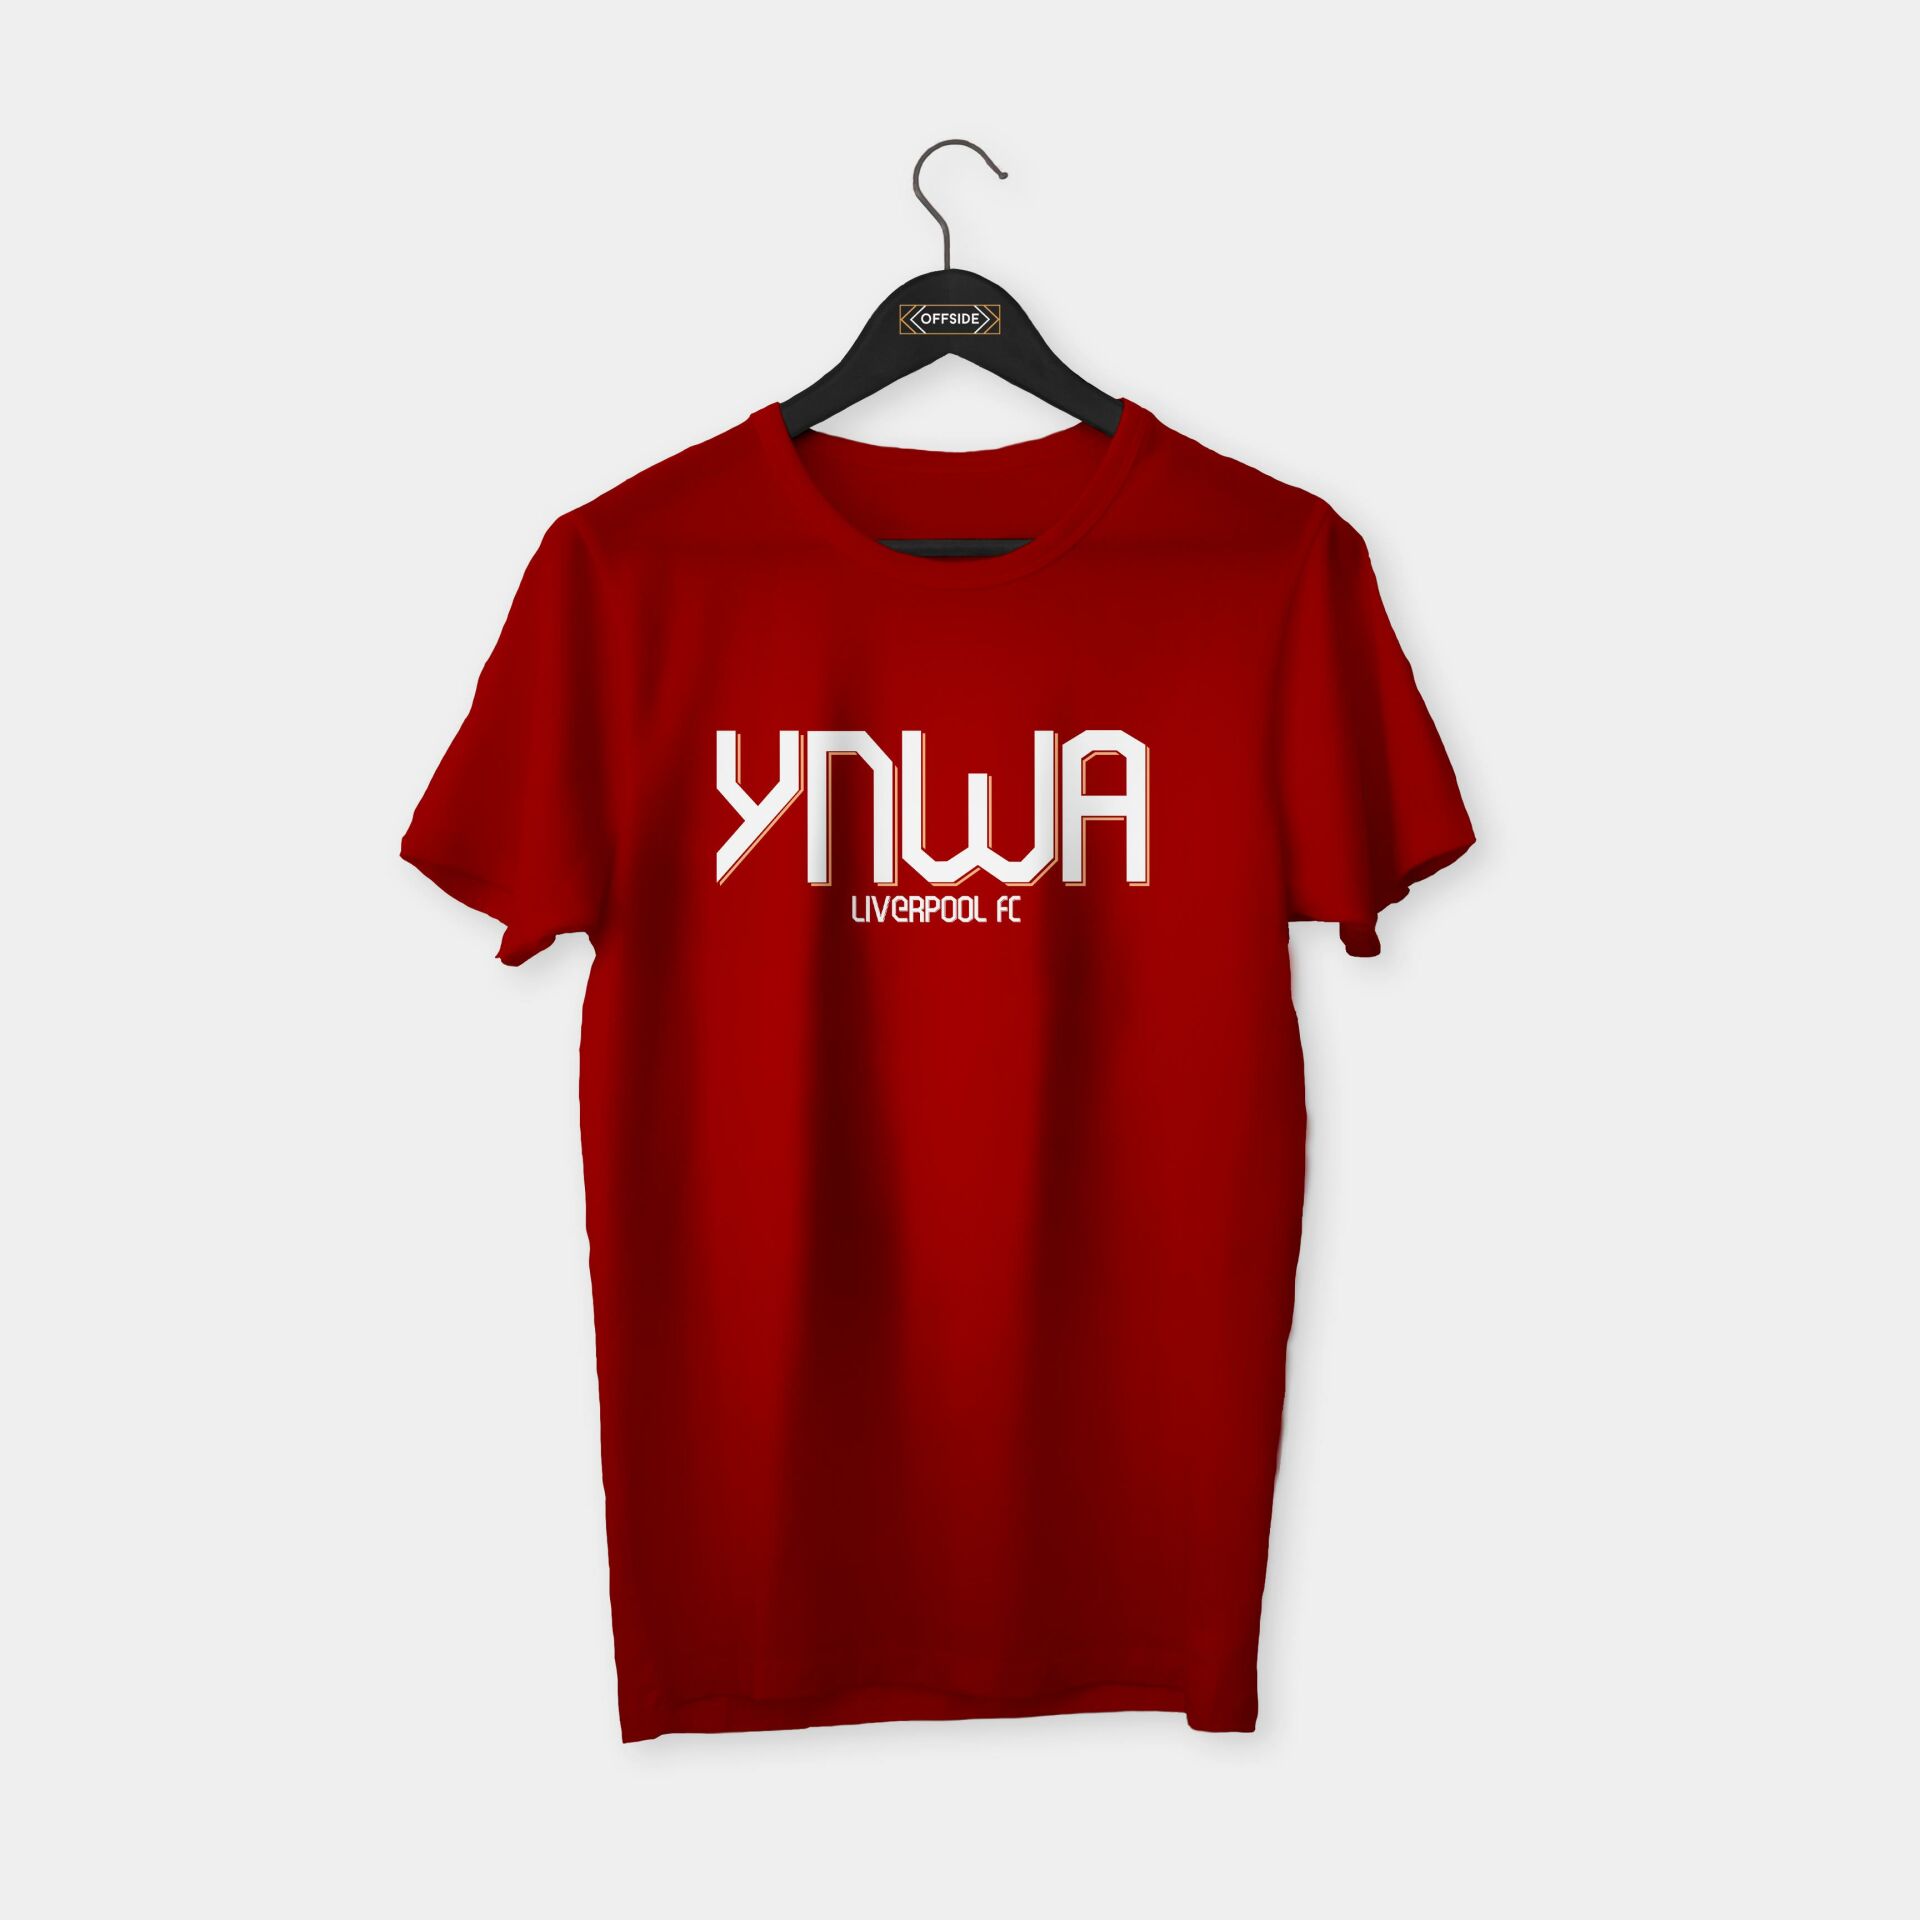 YNWA - Liverpool FC T-shirt